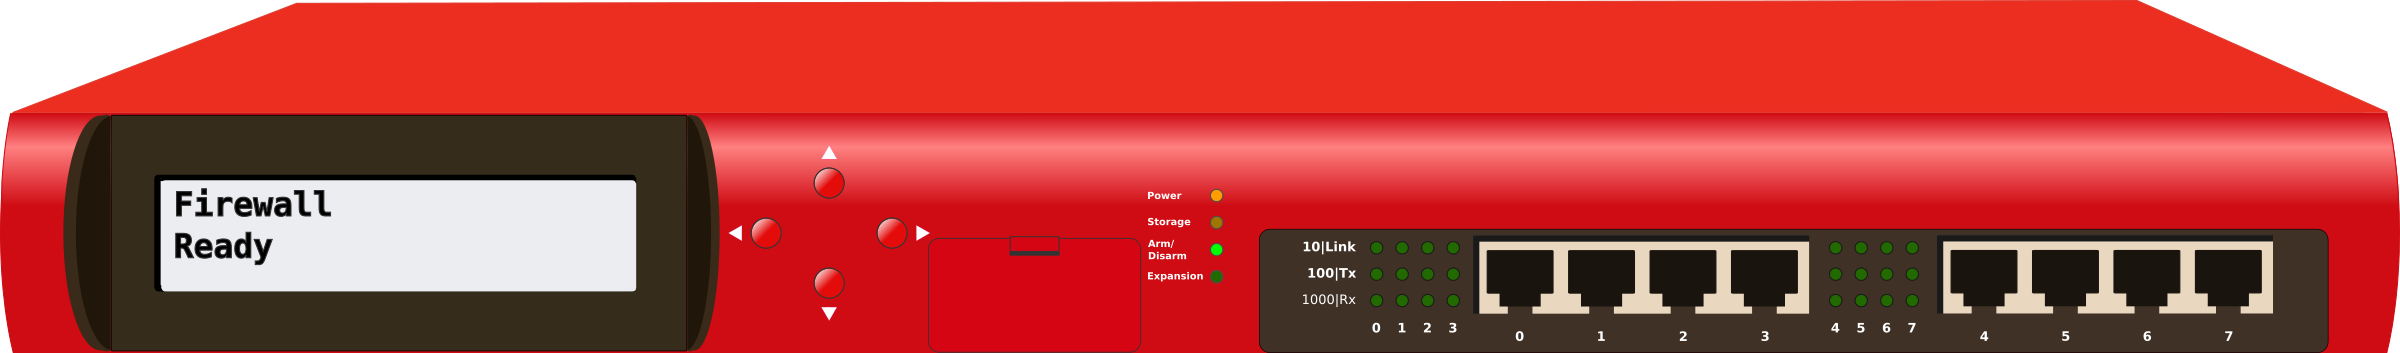 Red Firewall Appliance Clip arts